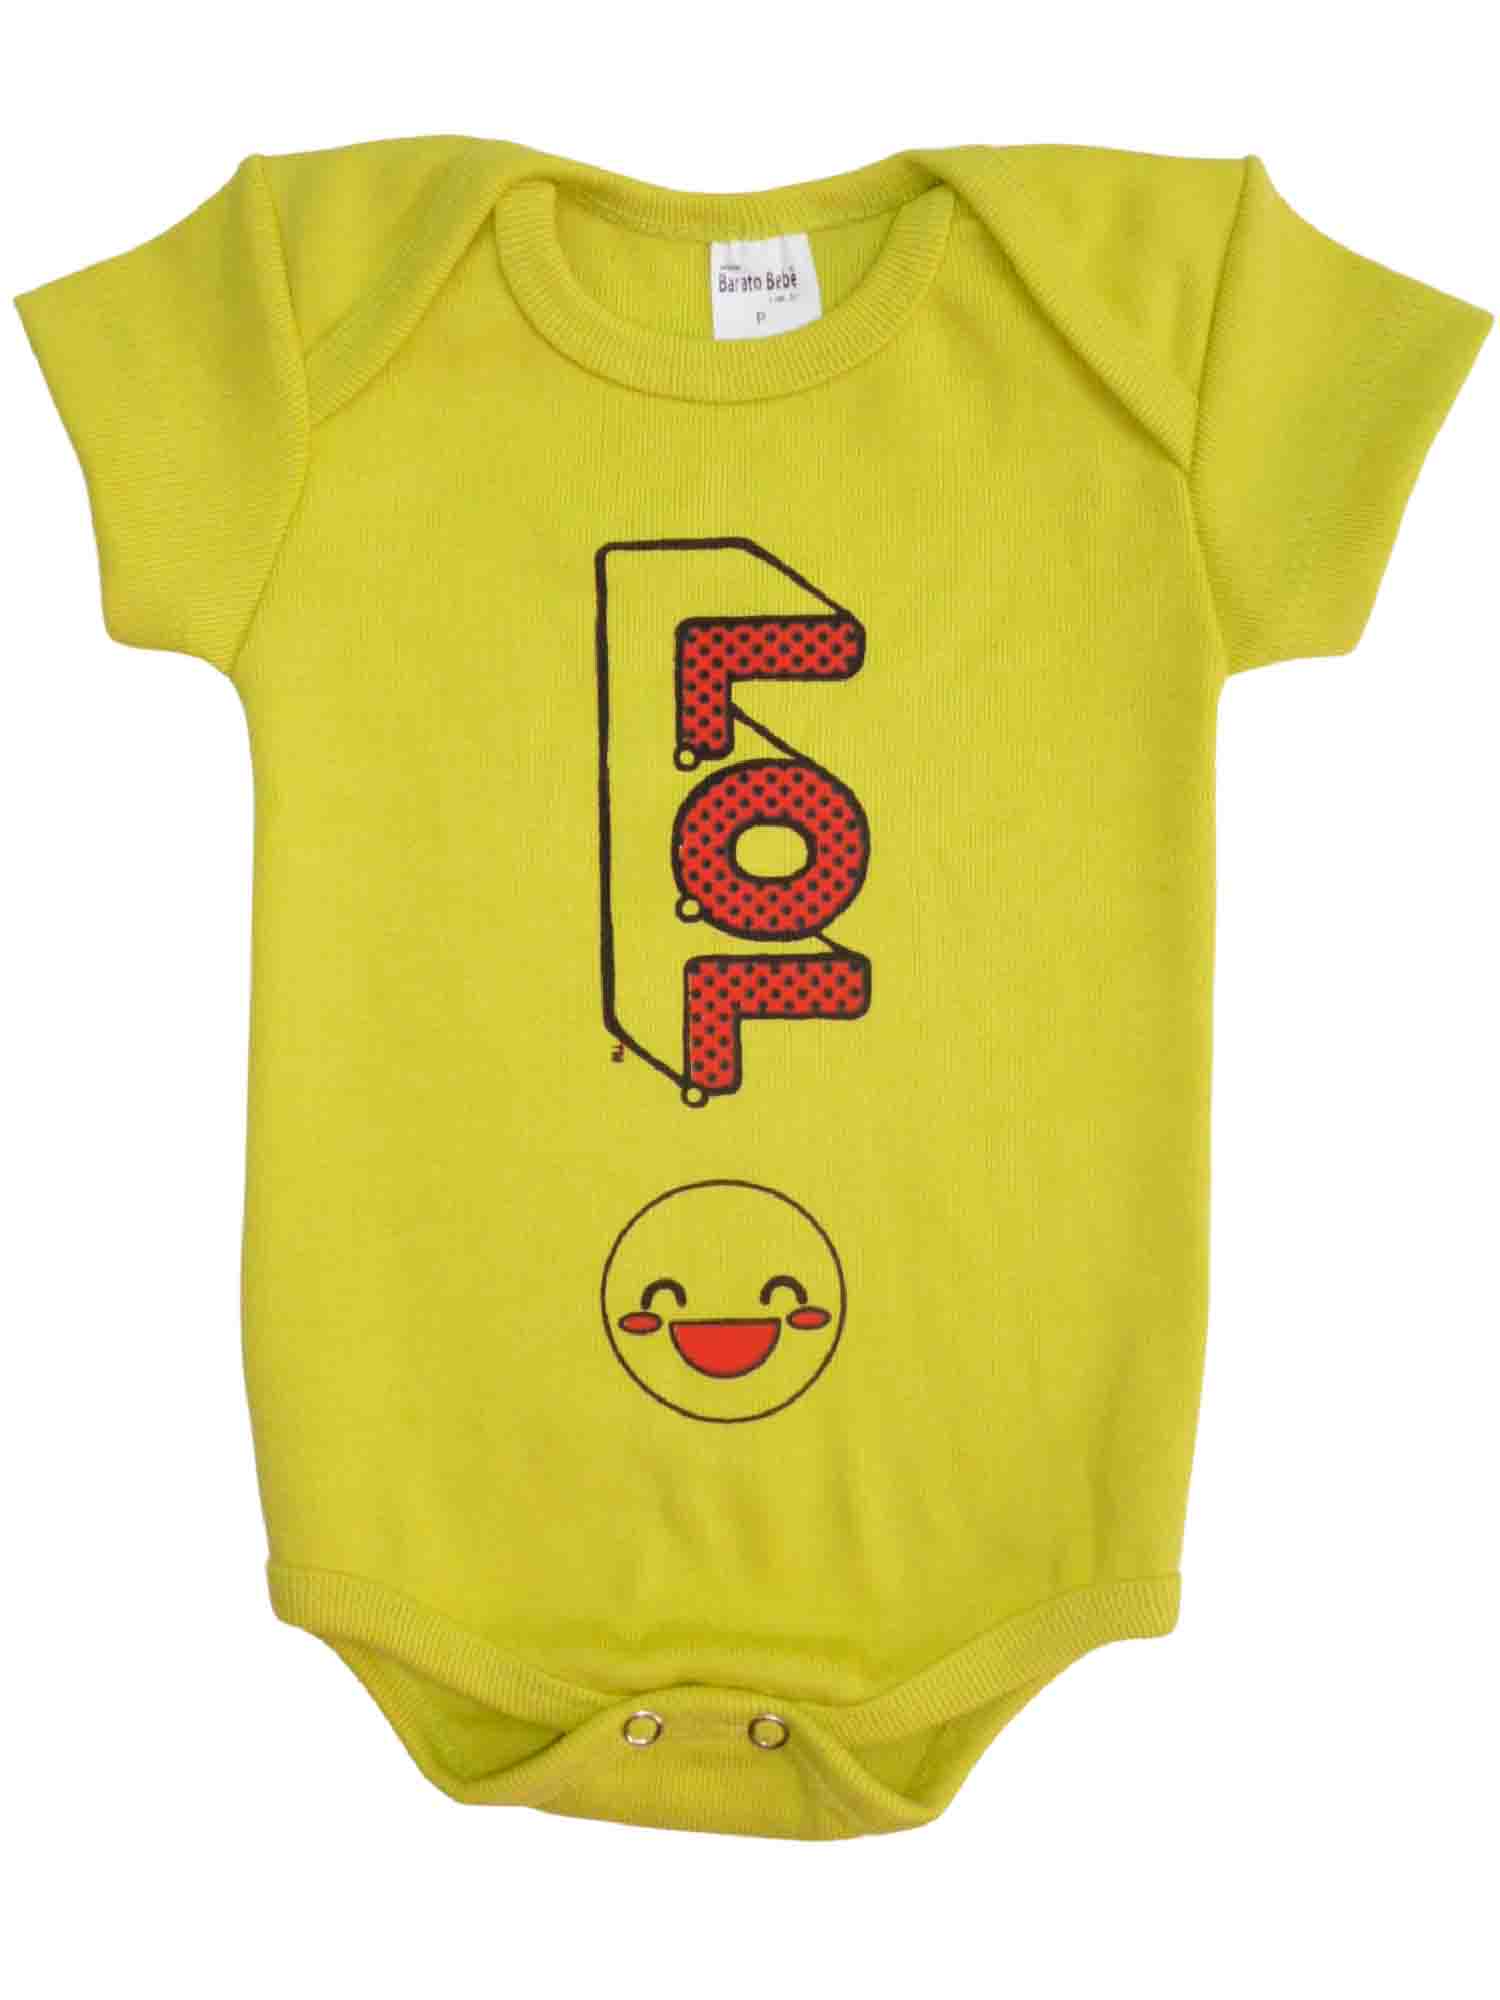 Body Bebê Manga Curta (P/M/G) - Veste de 0 a 18 Meses - LOL - fluorescente - Barato Bebê